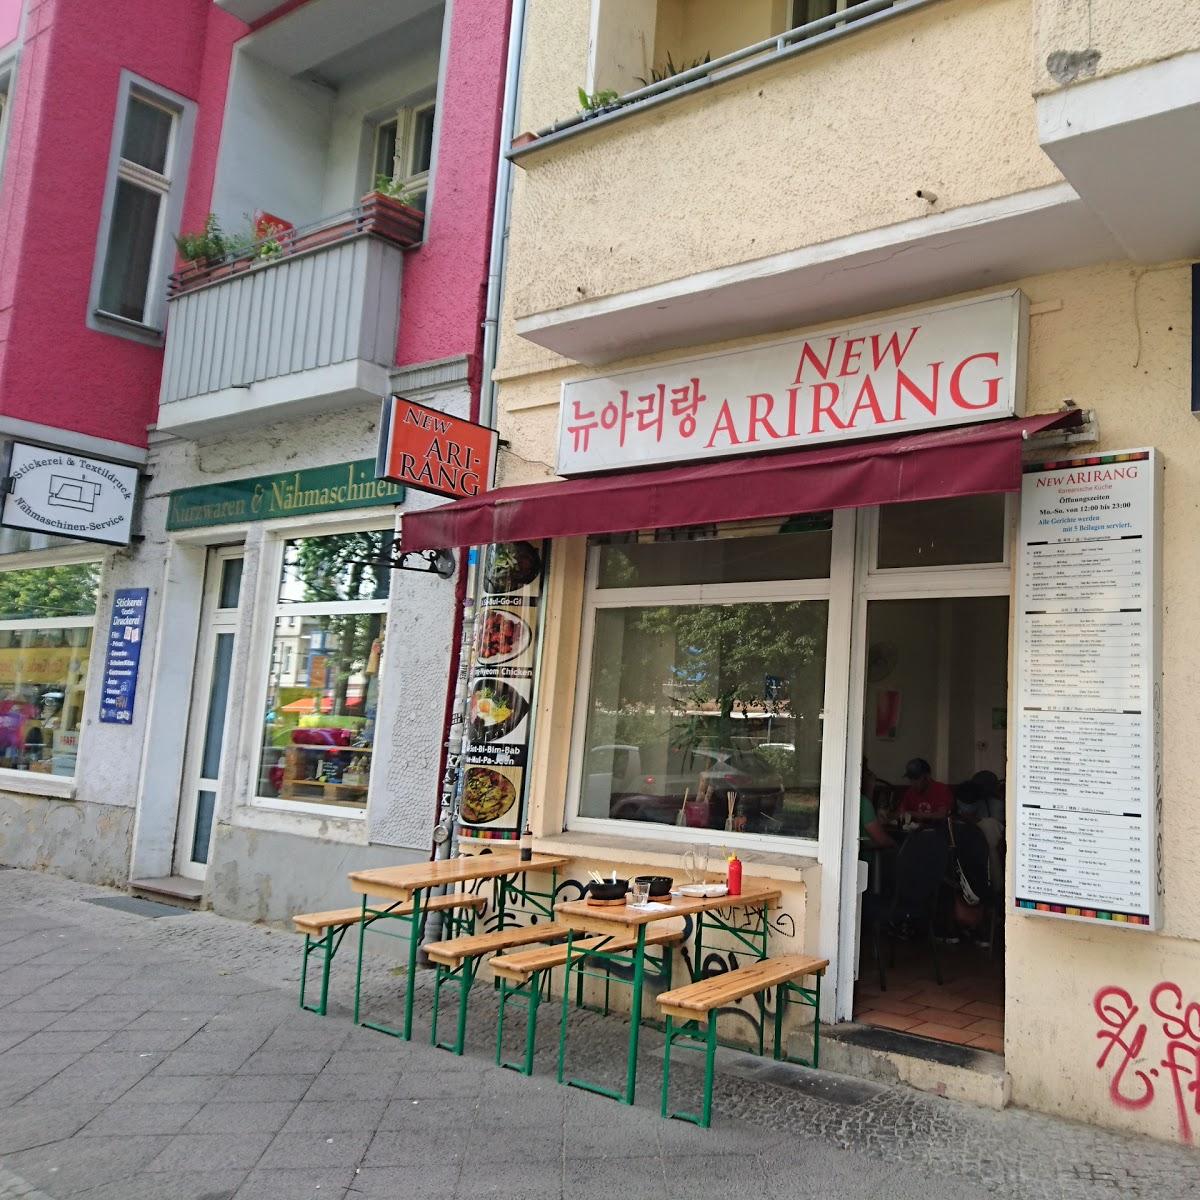 Restaurant "Restaurant New Arirang" in Berlin